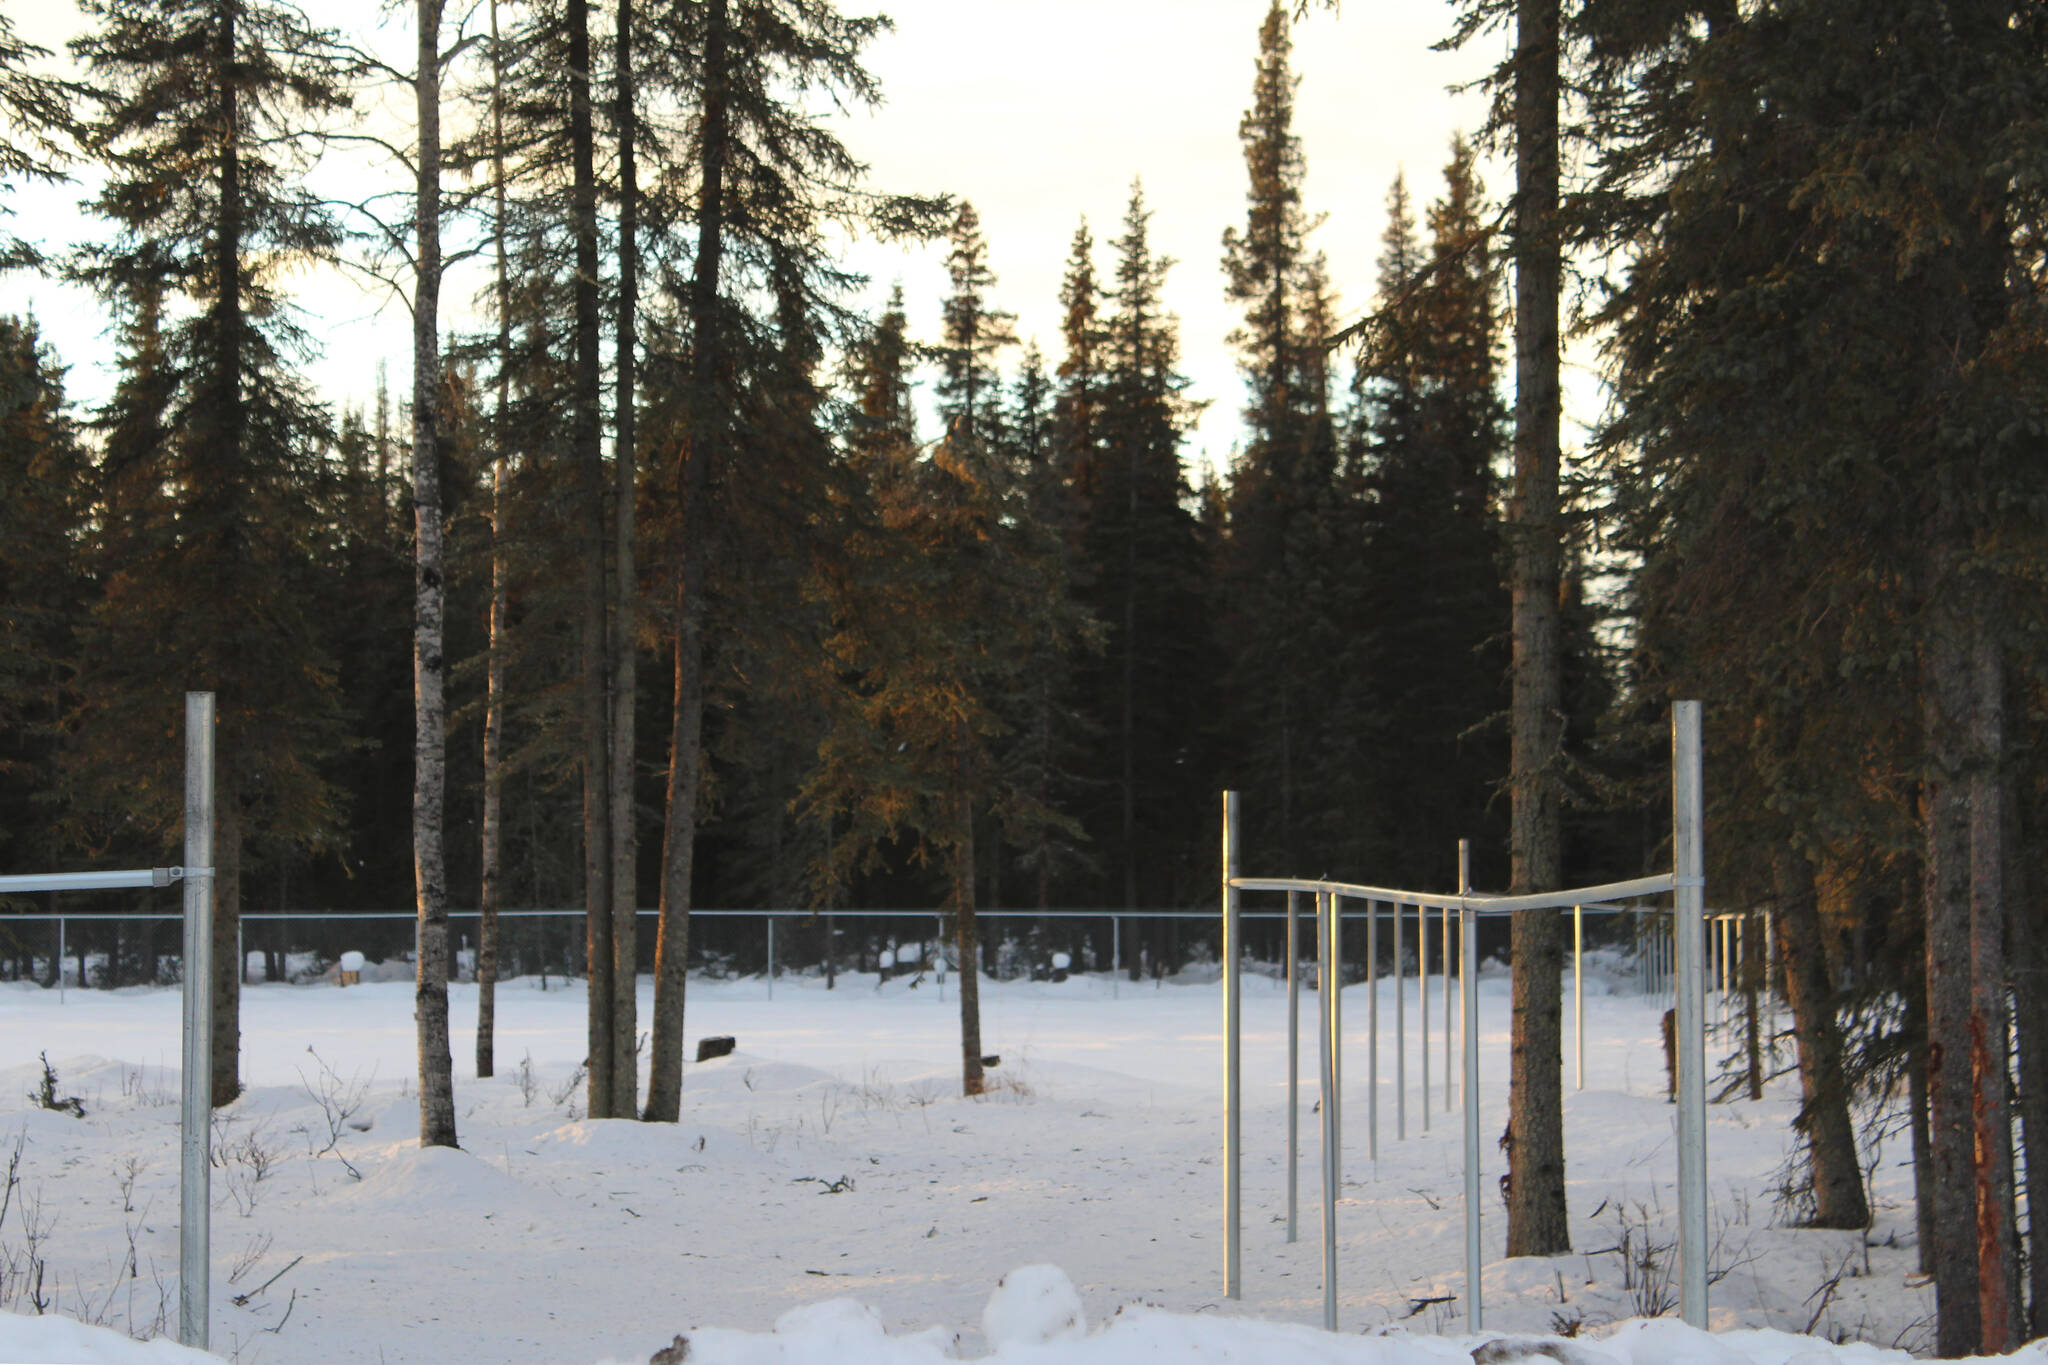 Fencing marks the boundaries of a planned dog park in Kenai near Daubenspeck Park on Monday, Dec. 27, 2021 in Kenai, Alaska. (Ashlyn O’Hara/Peninsula Clarion)